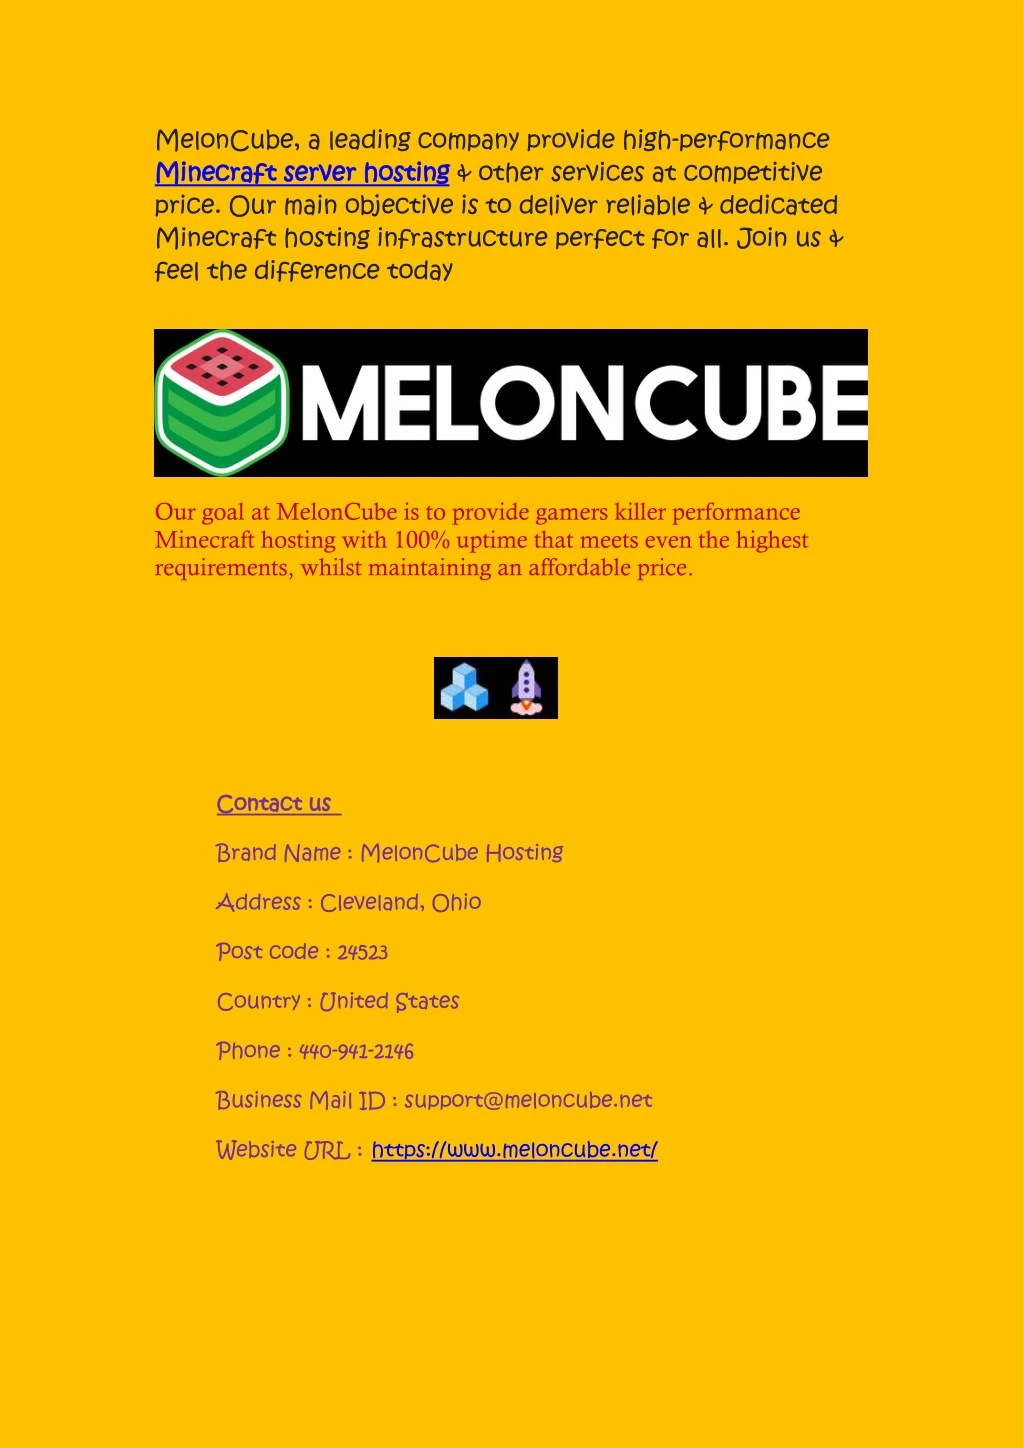 meloncube a leading company provide high